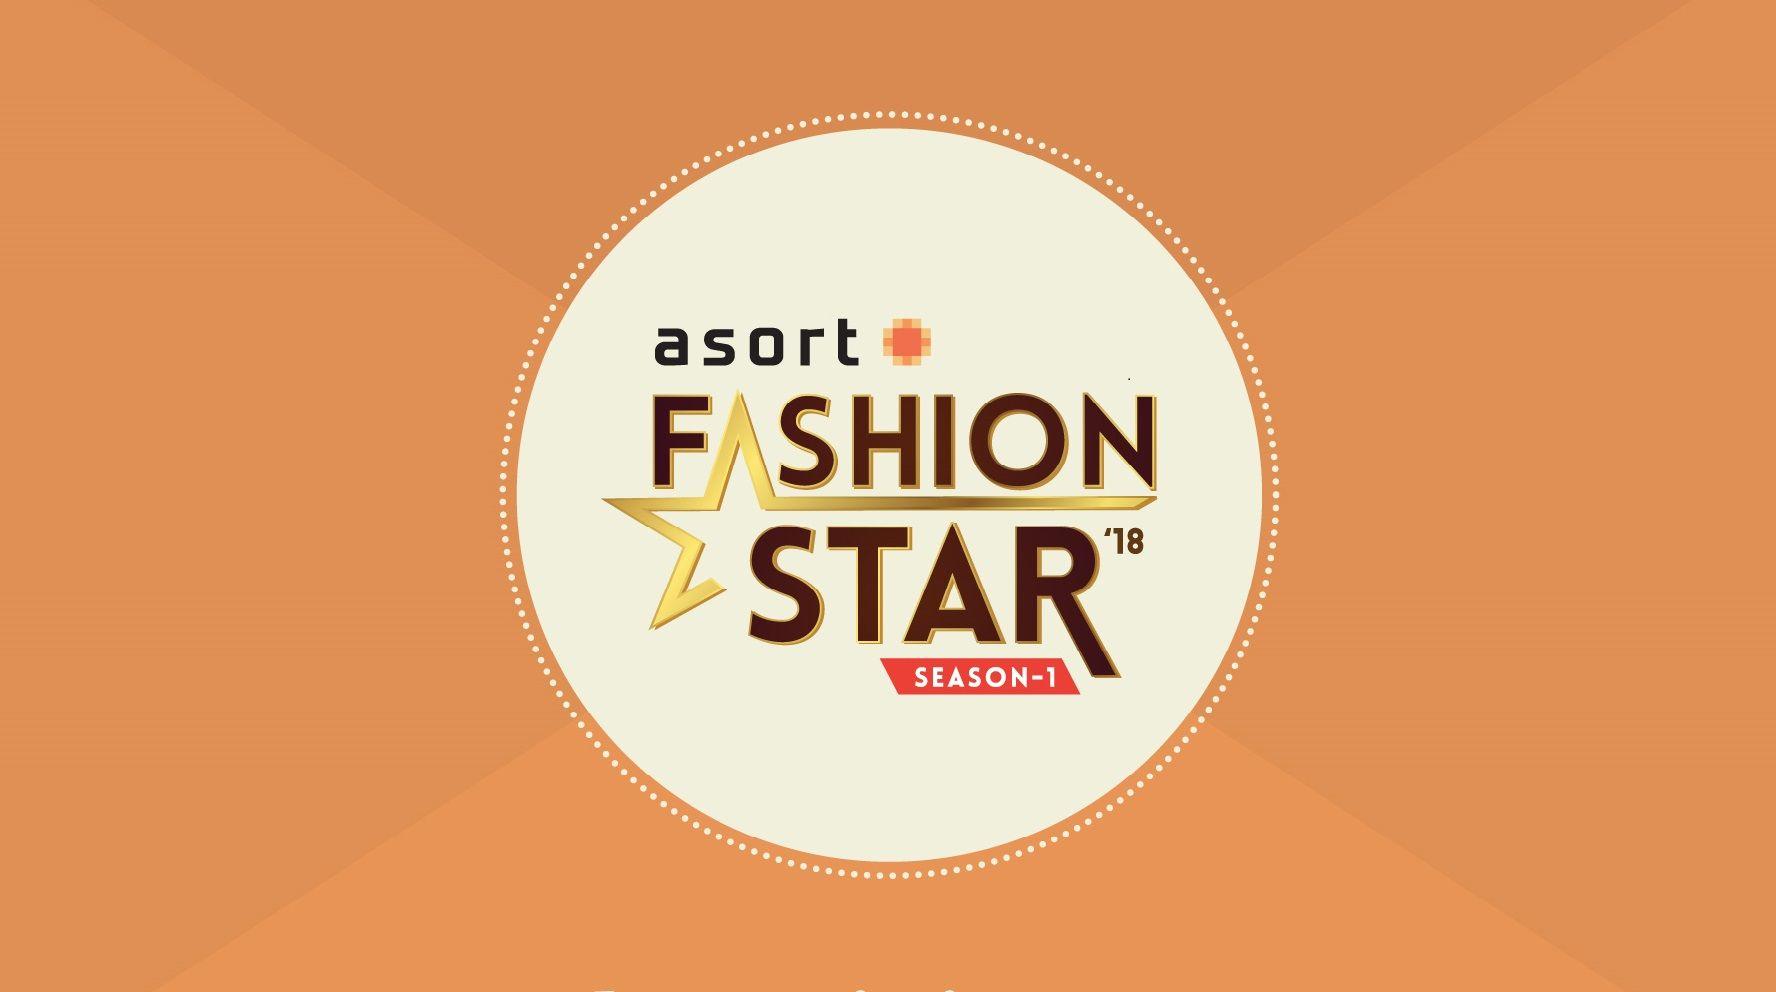 Fashion Star in Circle Logo - ASORT FASHION STAR 2018 - Season 1 Round 2 - Inside DS.Asort